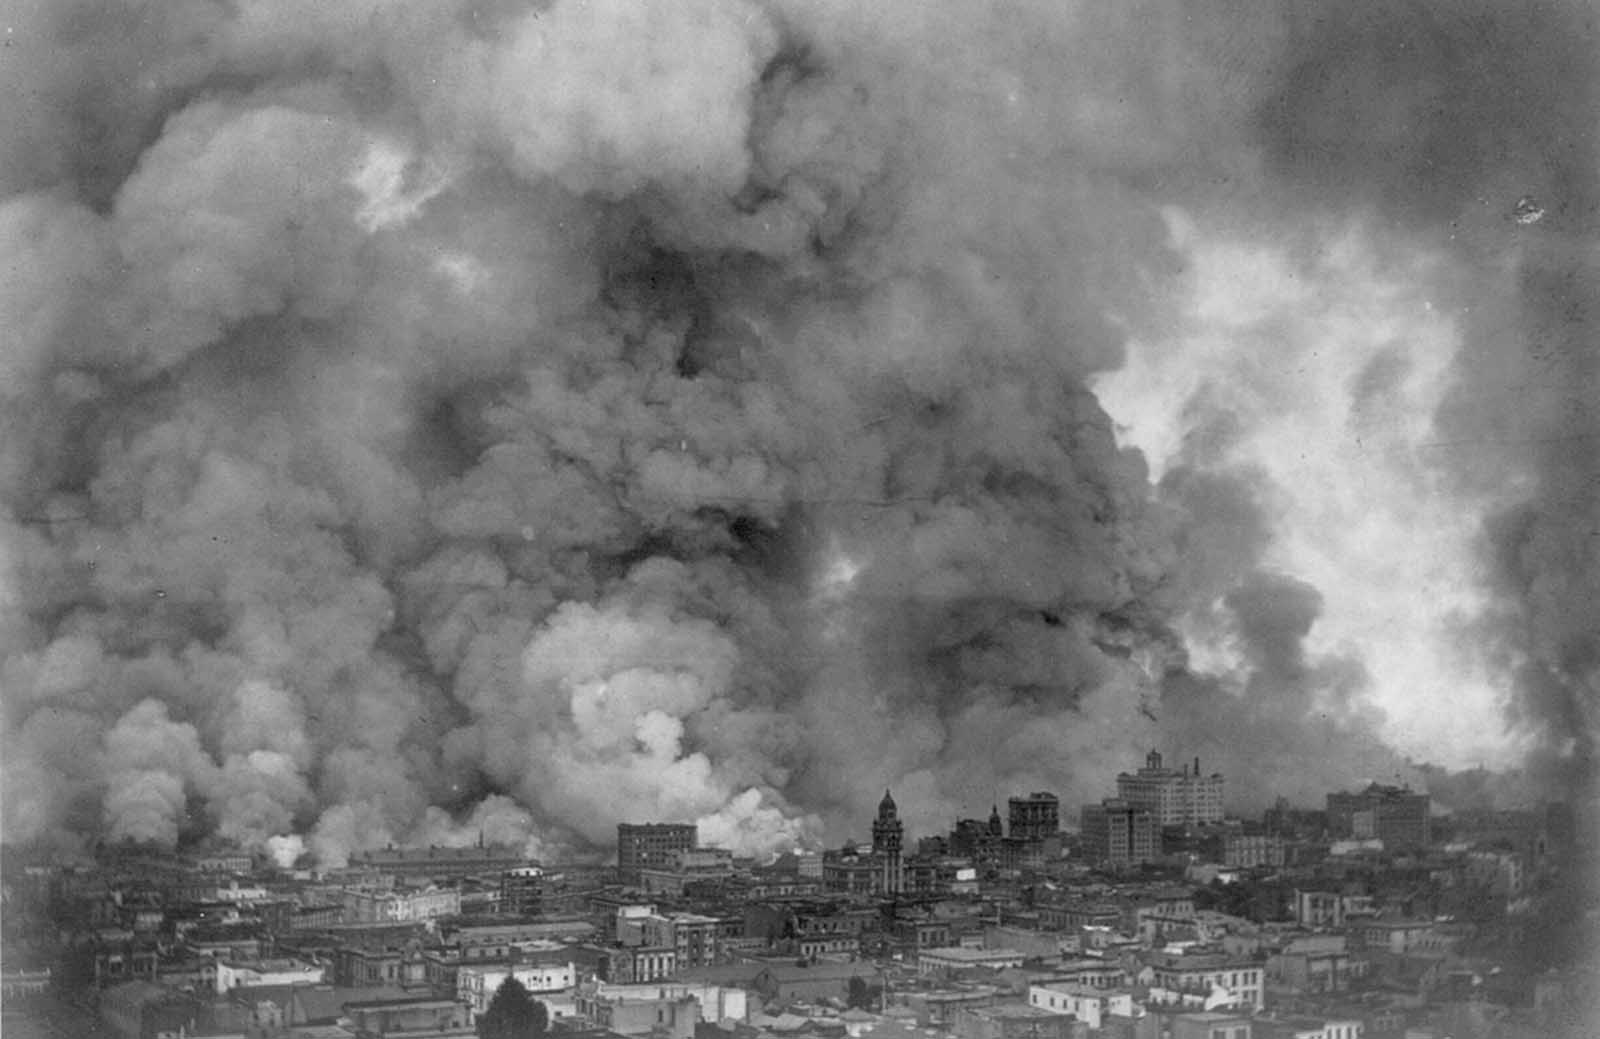 San Francisco in flames, April 18,1906.